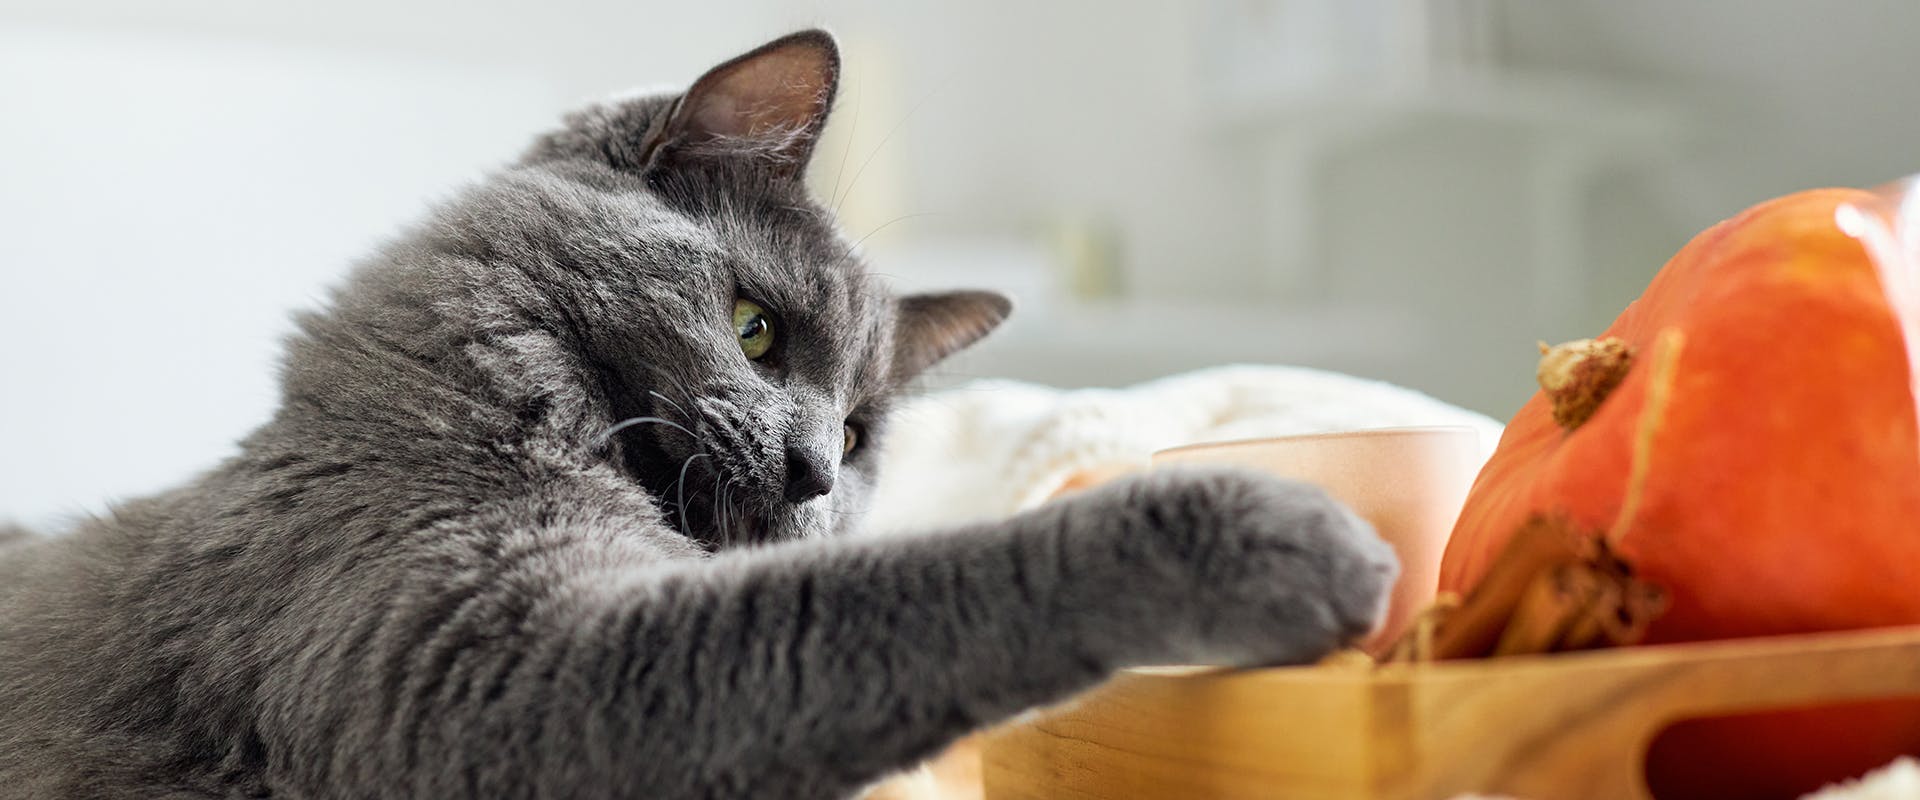 A fluffy grey cat pawing at a pumpkin